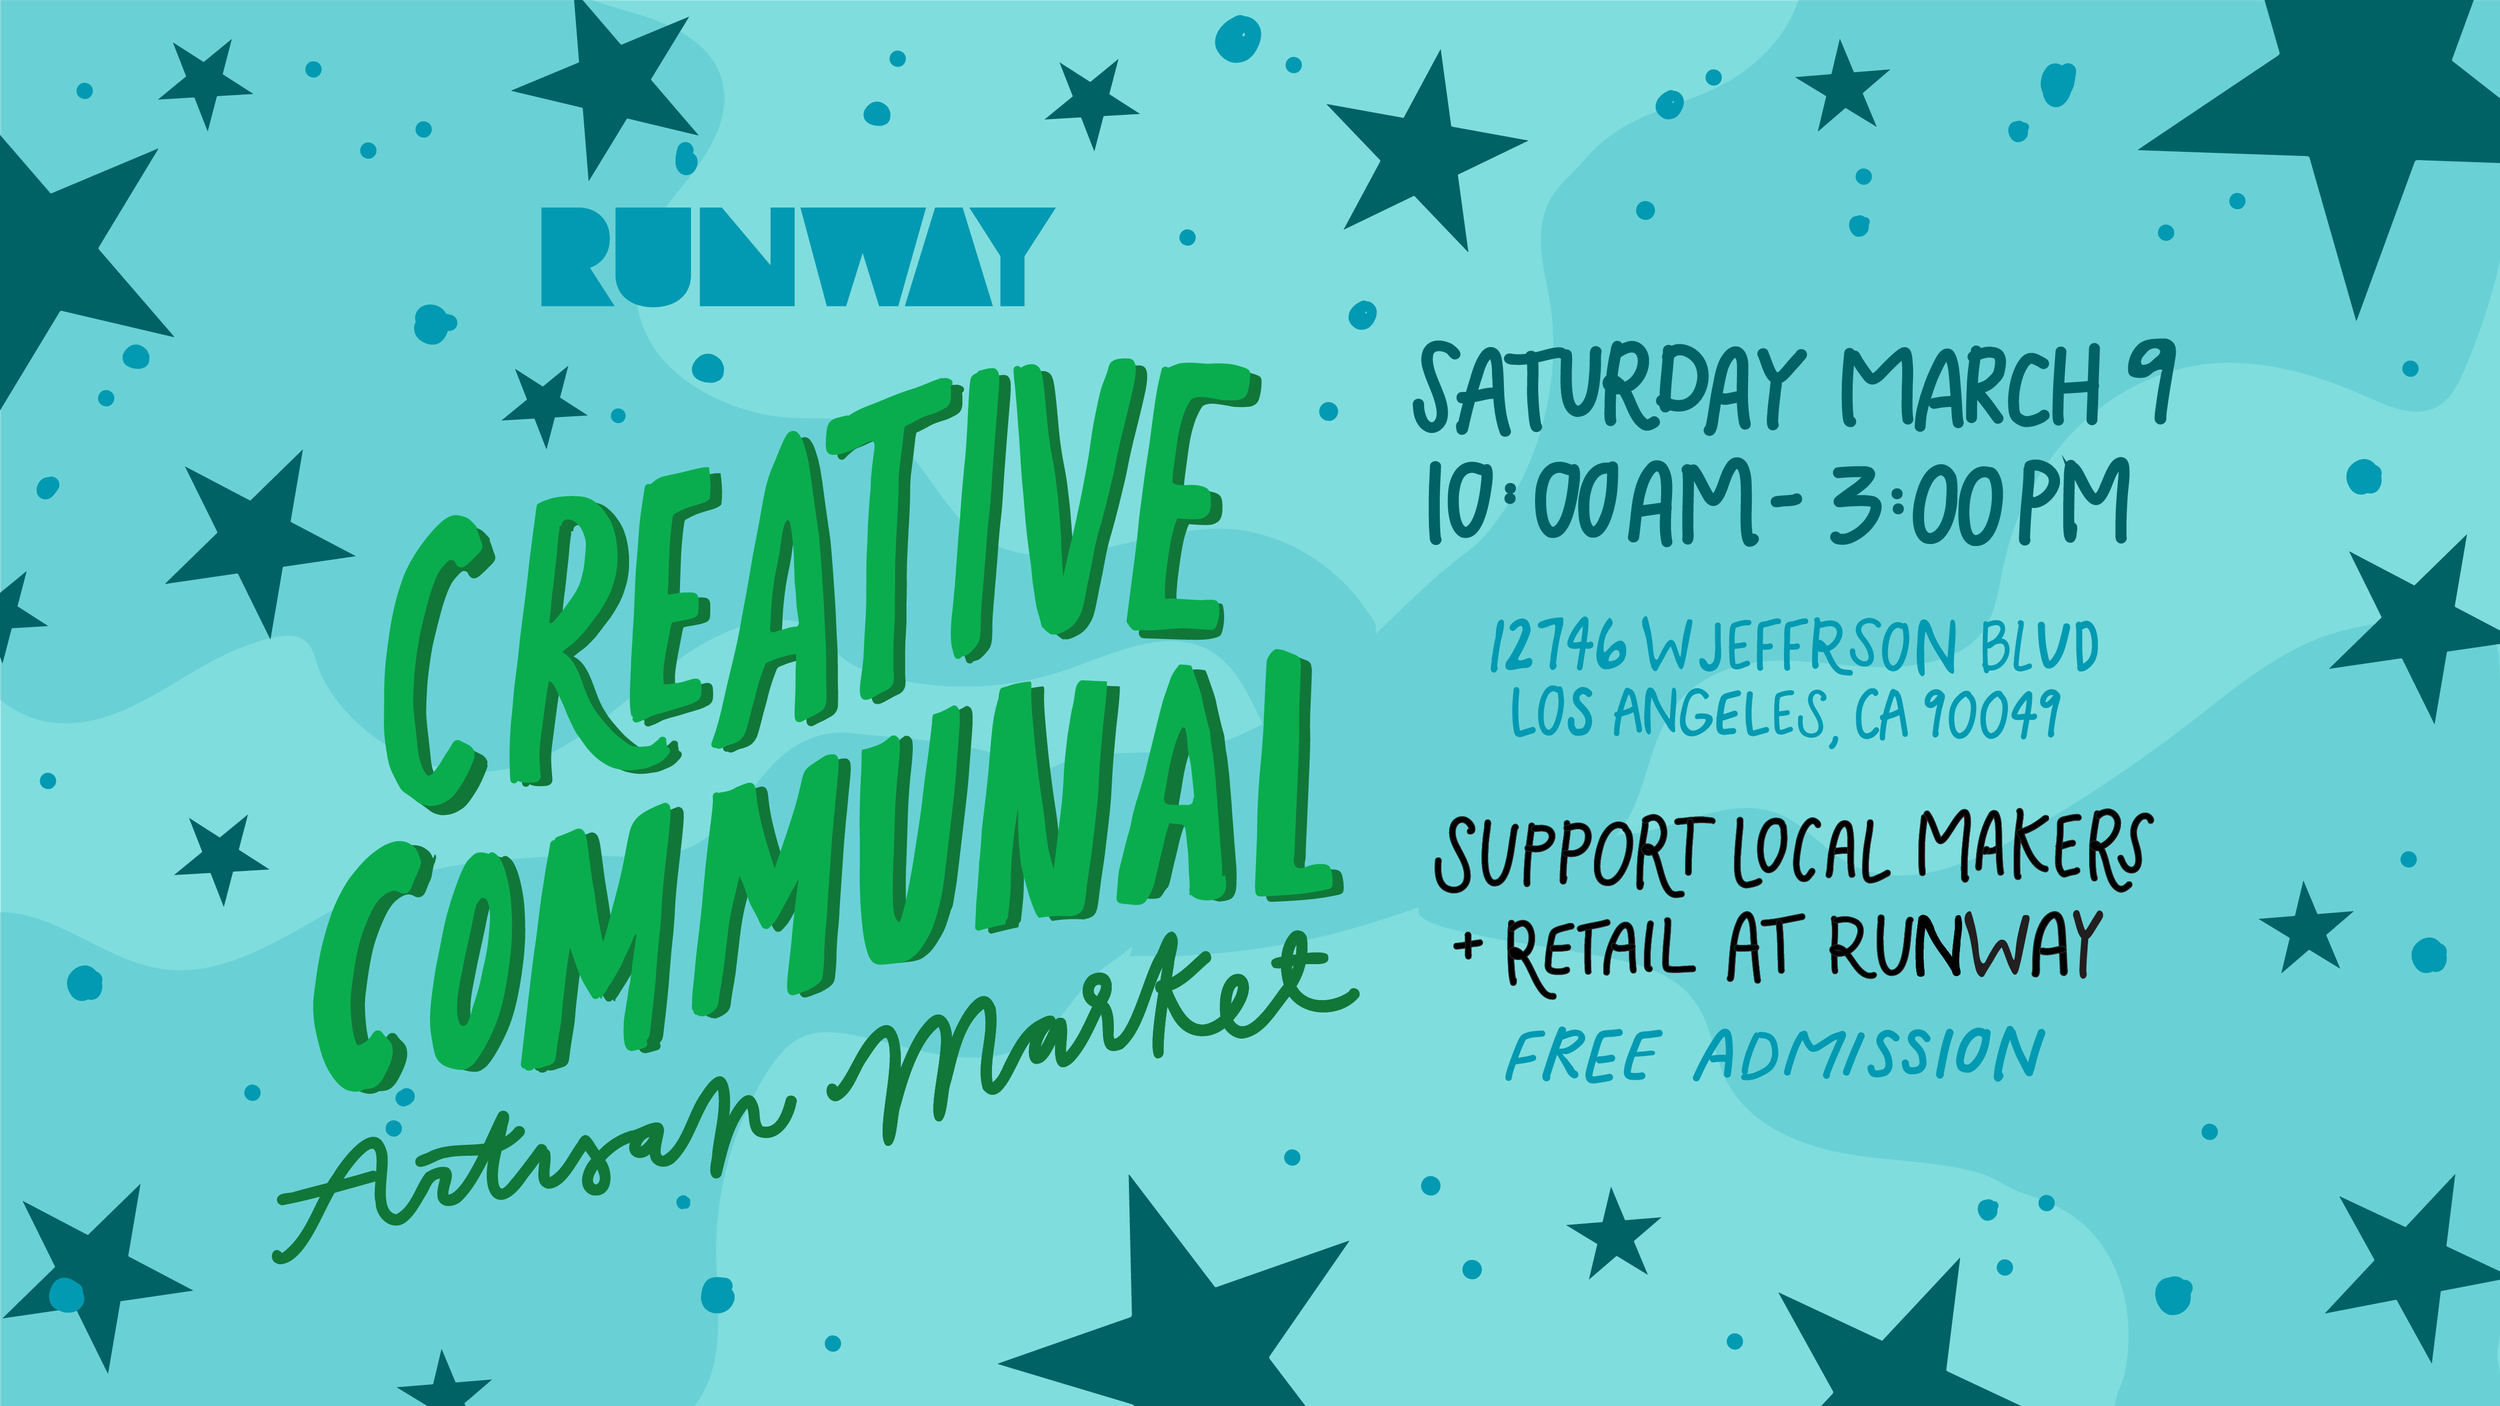 Creative Communal Artisan Market at RUNWAY in Playa Vista on Saturday, March 9